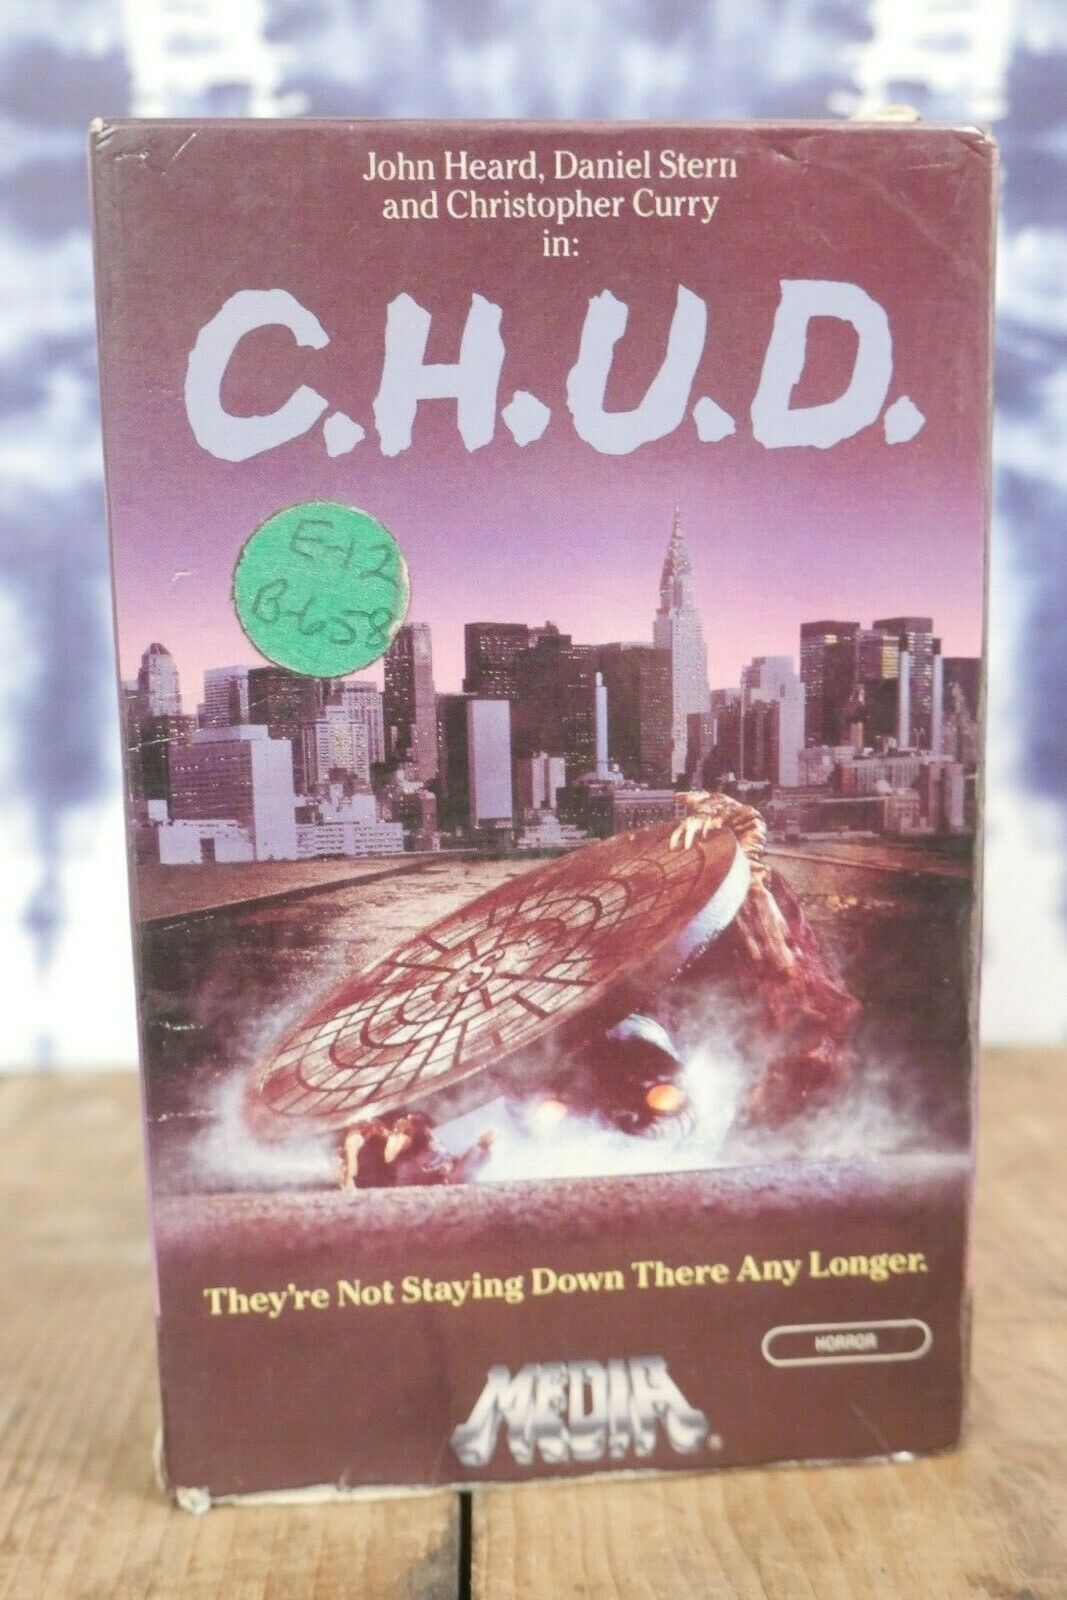 C.h.u.d. Beta Rare 1984 John Heard Daniel Stern Chud Horror - Media